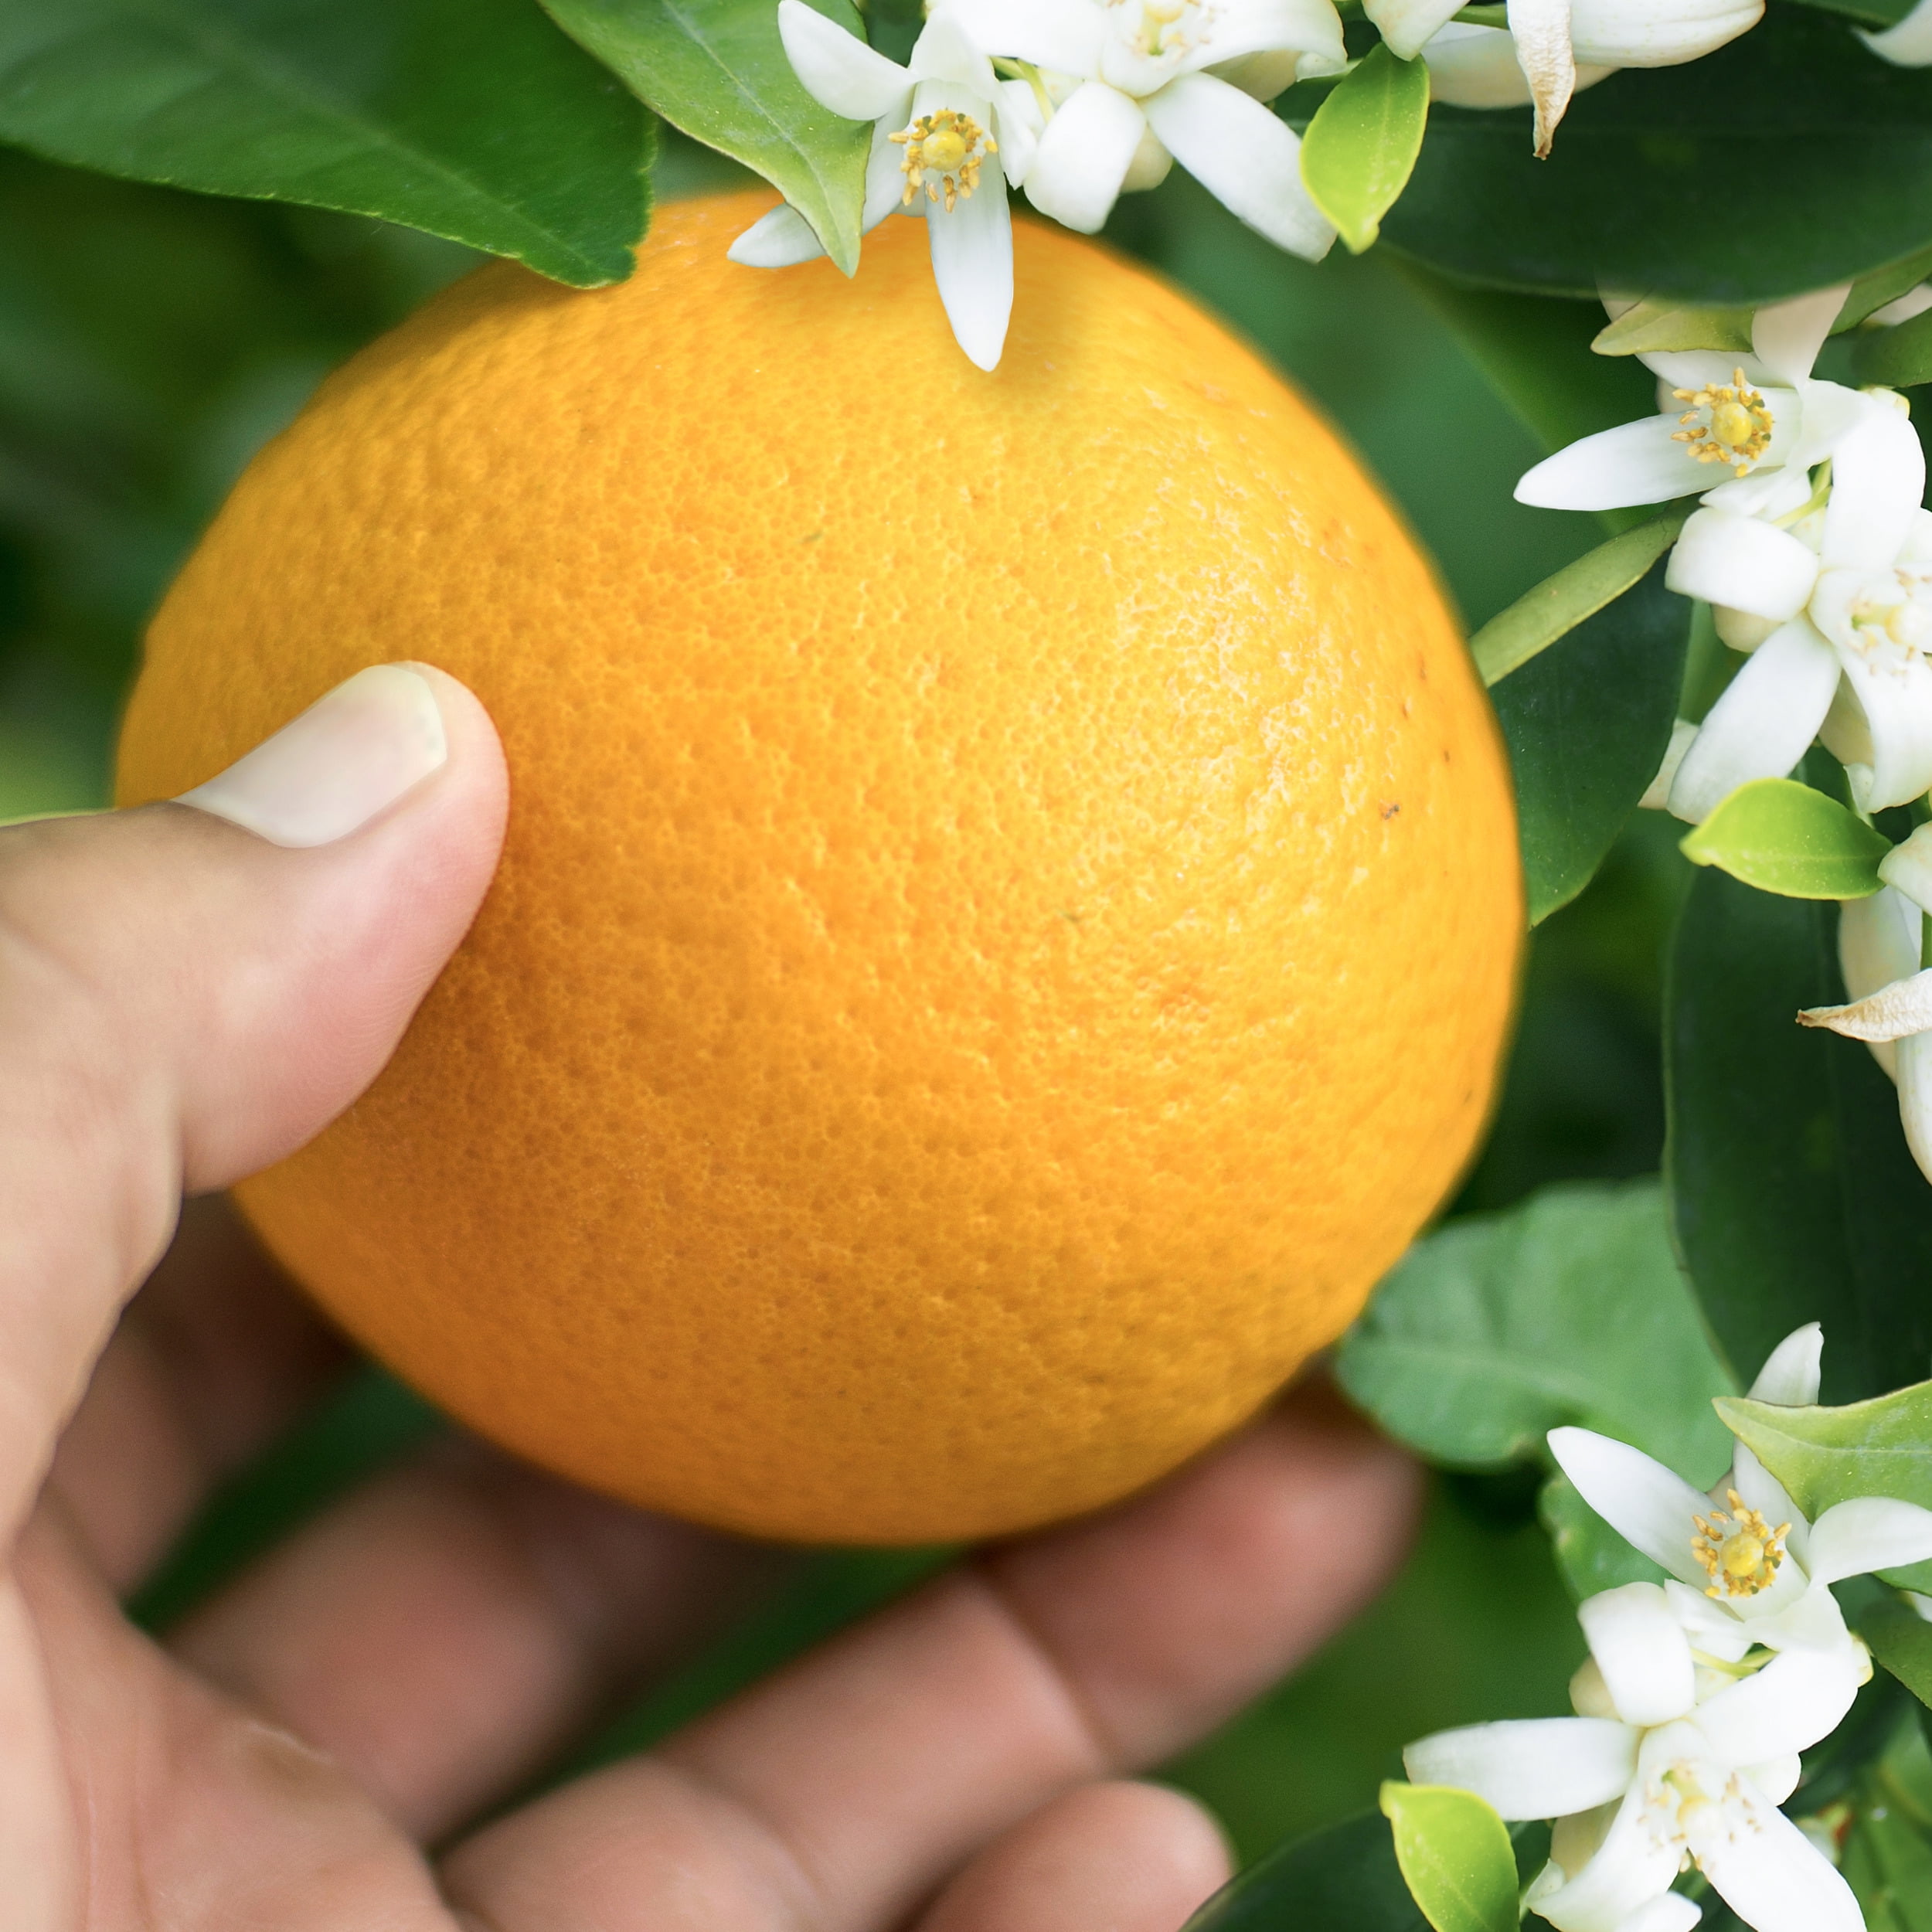 Herbal Essences Orange Blossom Volume Shampoo, For All Hair Types 13.5 fl  oz 